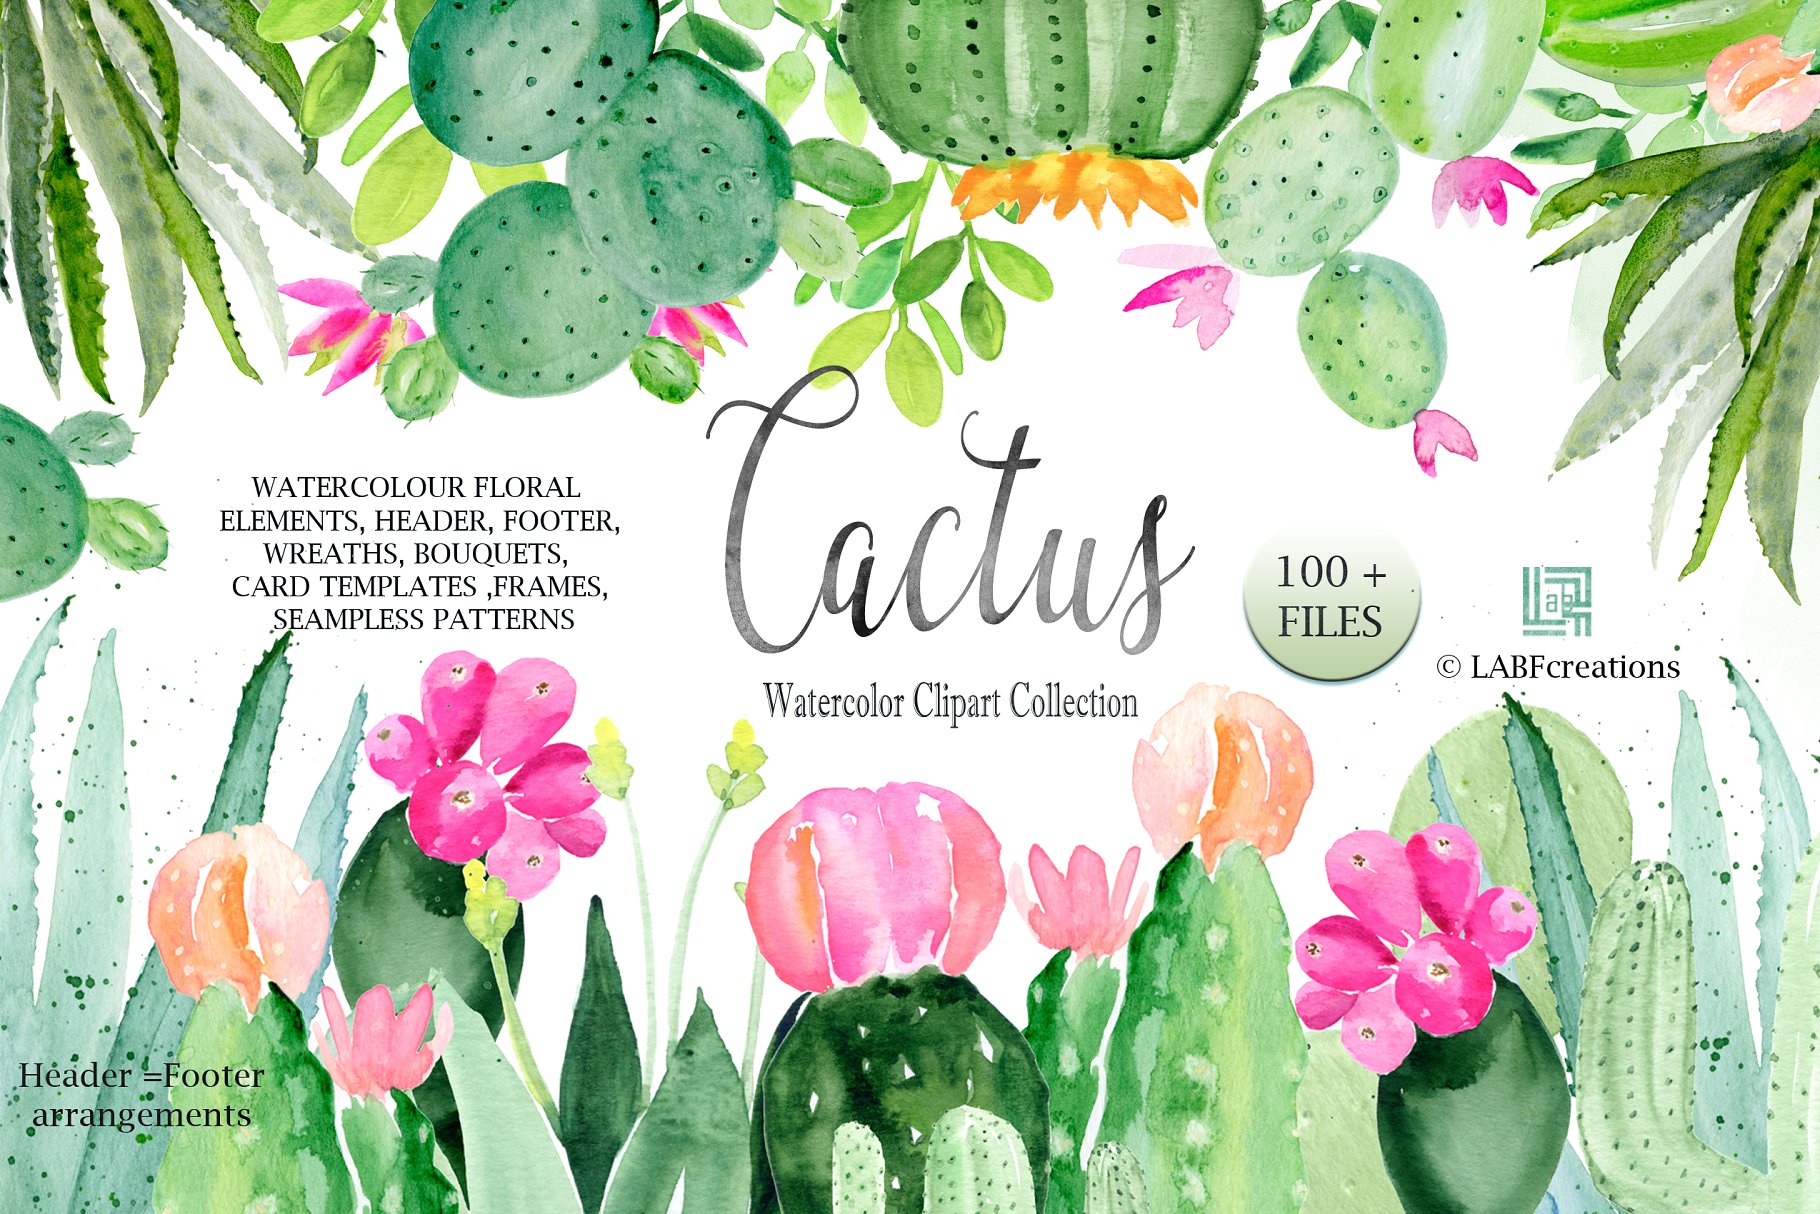 仙人掌水彩剪贴画合集 Cactus watercolr clipart collection插图3